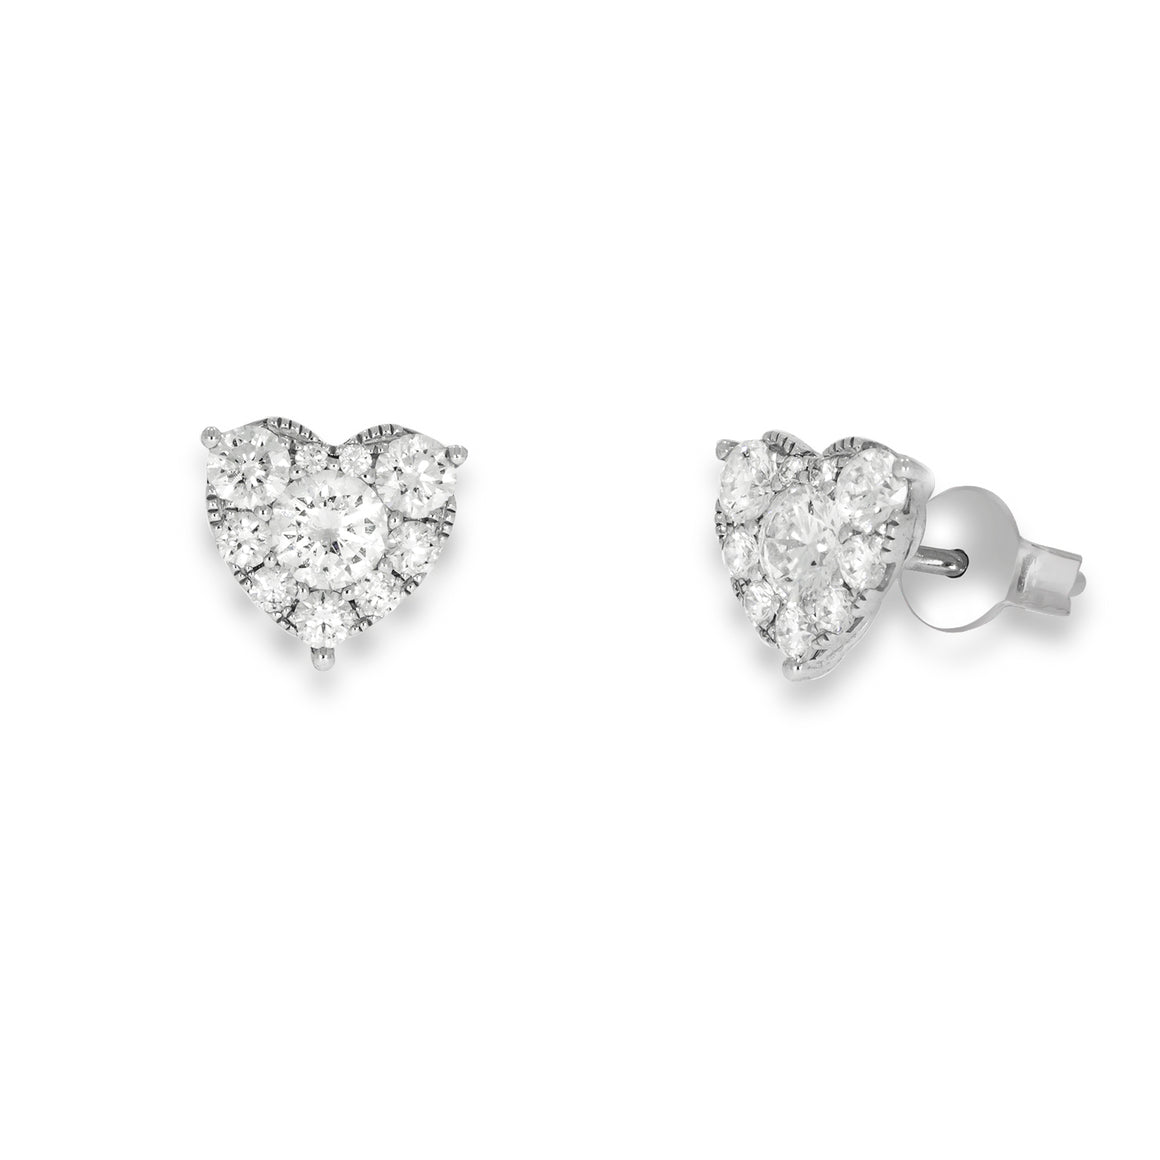 Gentle pave diamond, heart earrings . stud earrings . round Sparkling diamonds in 18K white gold. wedding erring's, prom earrings.